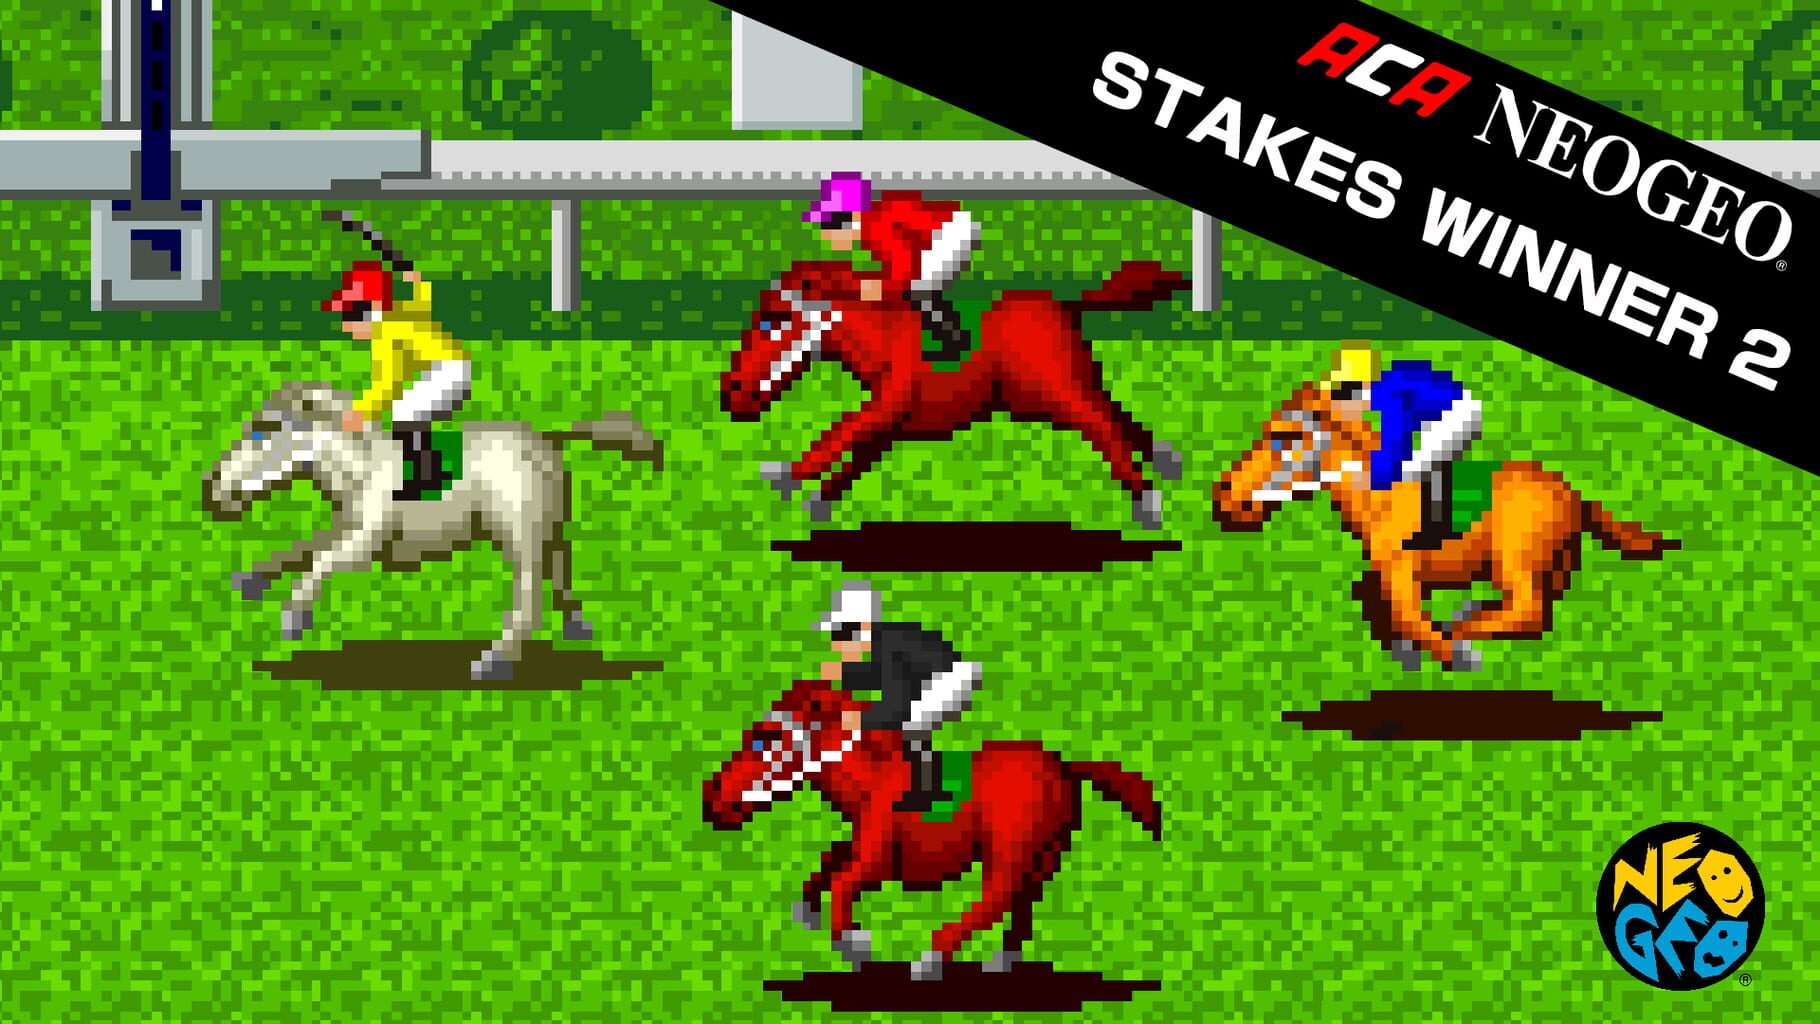 Arte - ACA Neo Geo: Stakes Winner 2